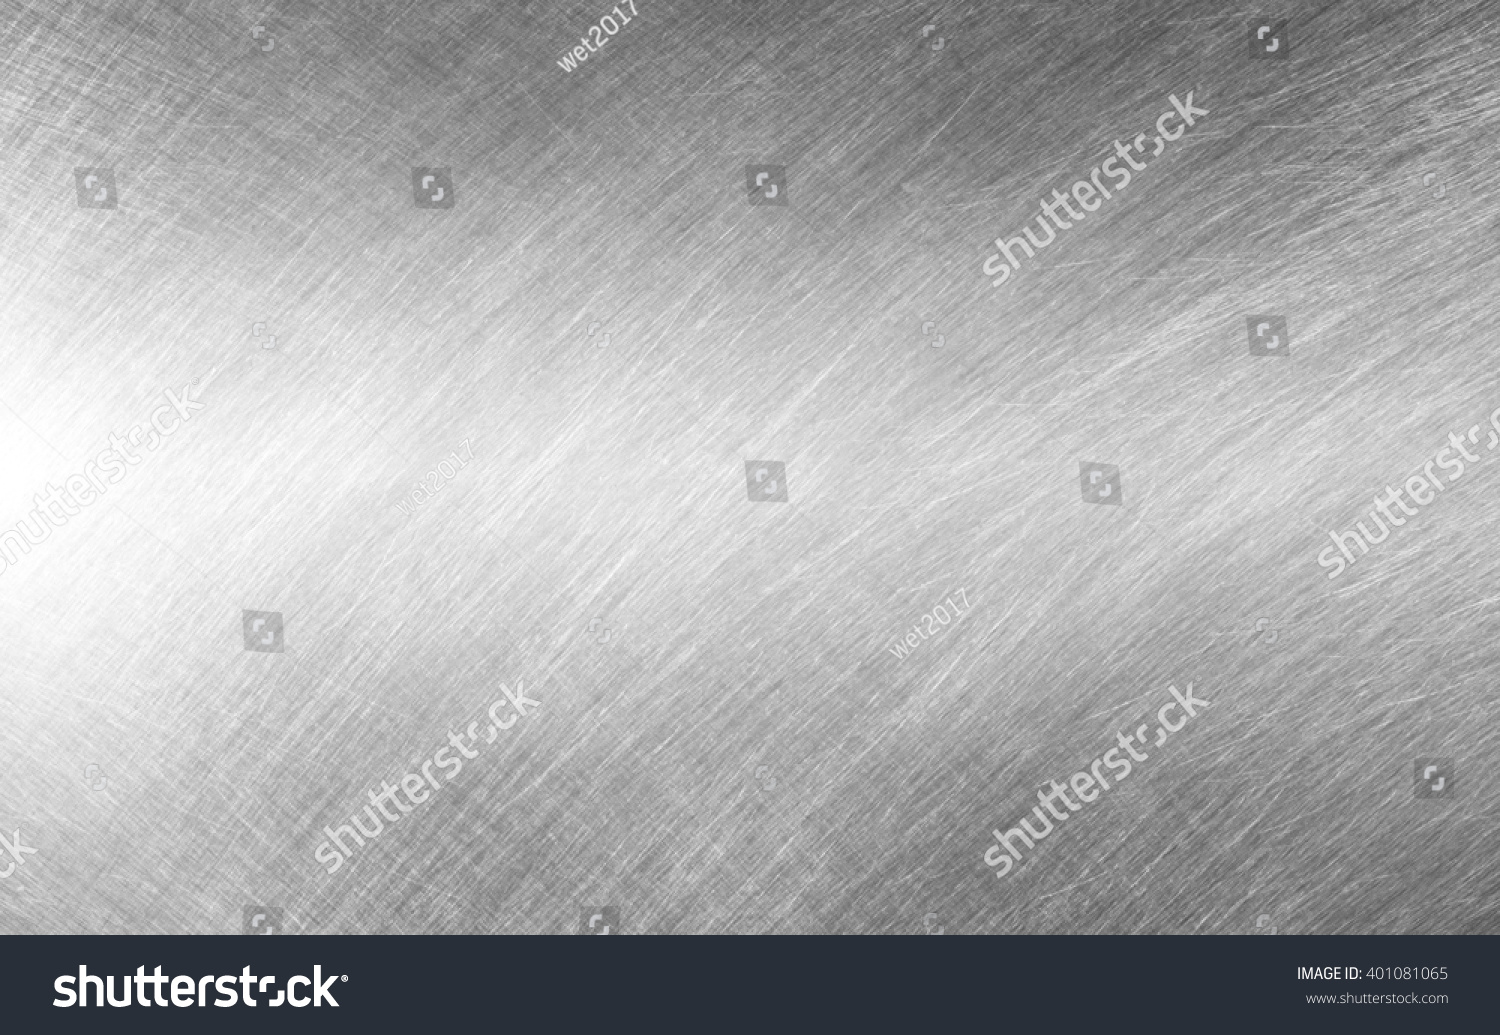 Stainless steel texture black silver textured pattern background. #401081065